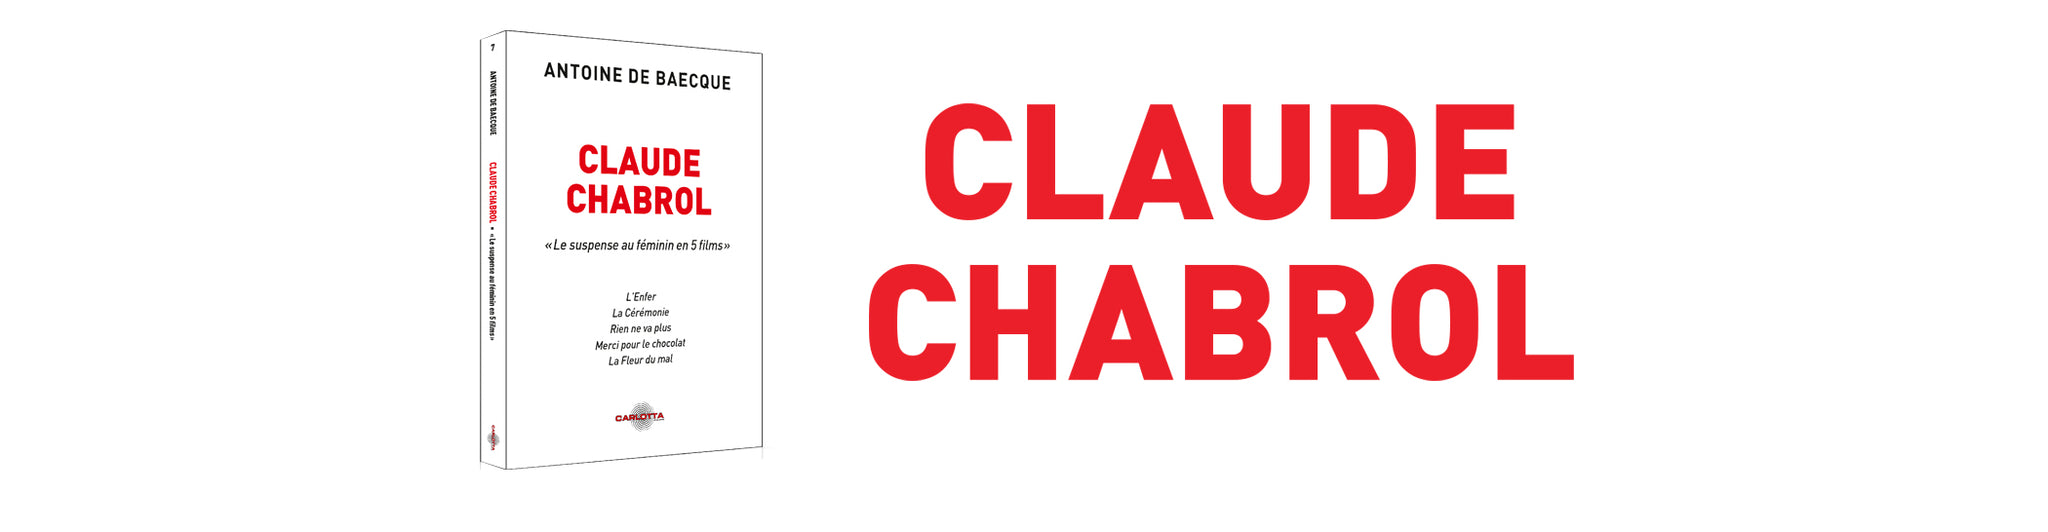 #7 Claude Chabrol